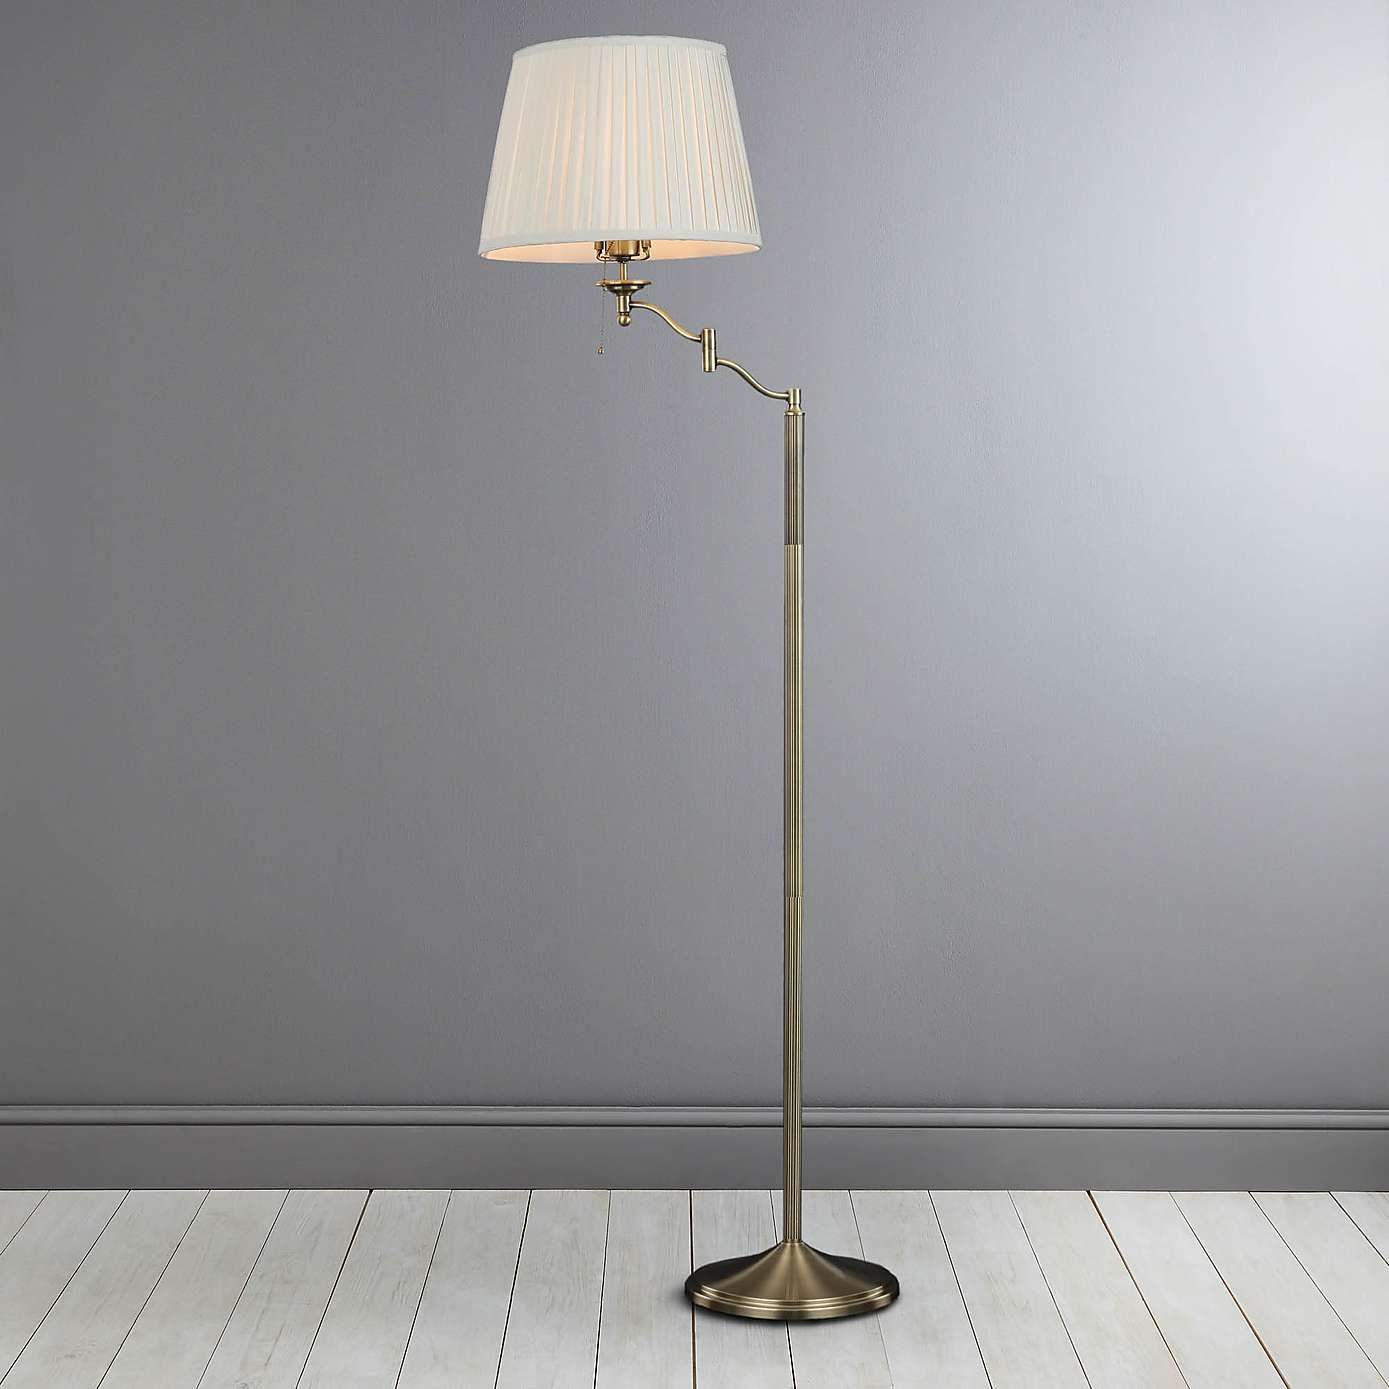 Dorma Elmbridge Swing Arm Floor Lamp In 2019 Swing Arm for dimensions 1389 X 1389